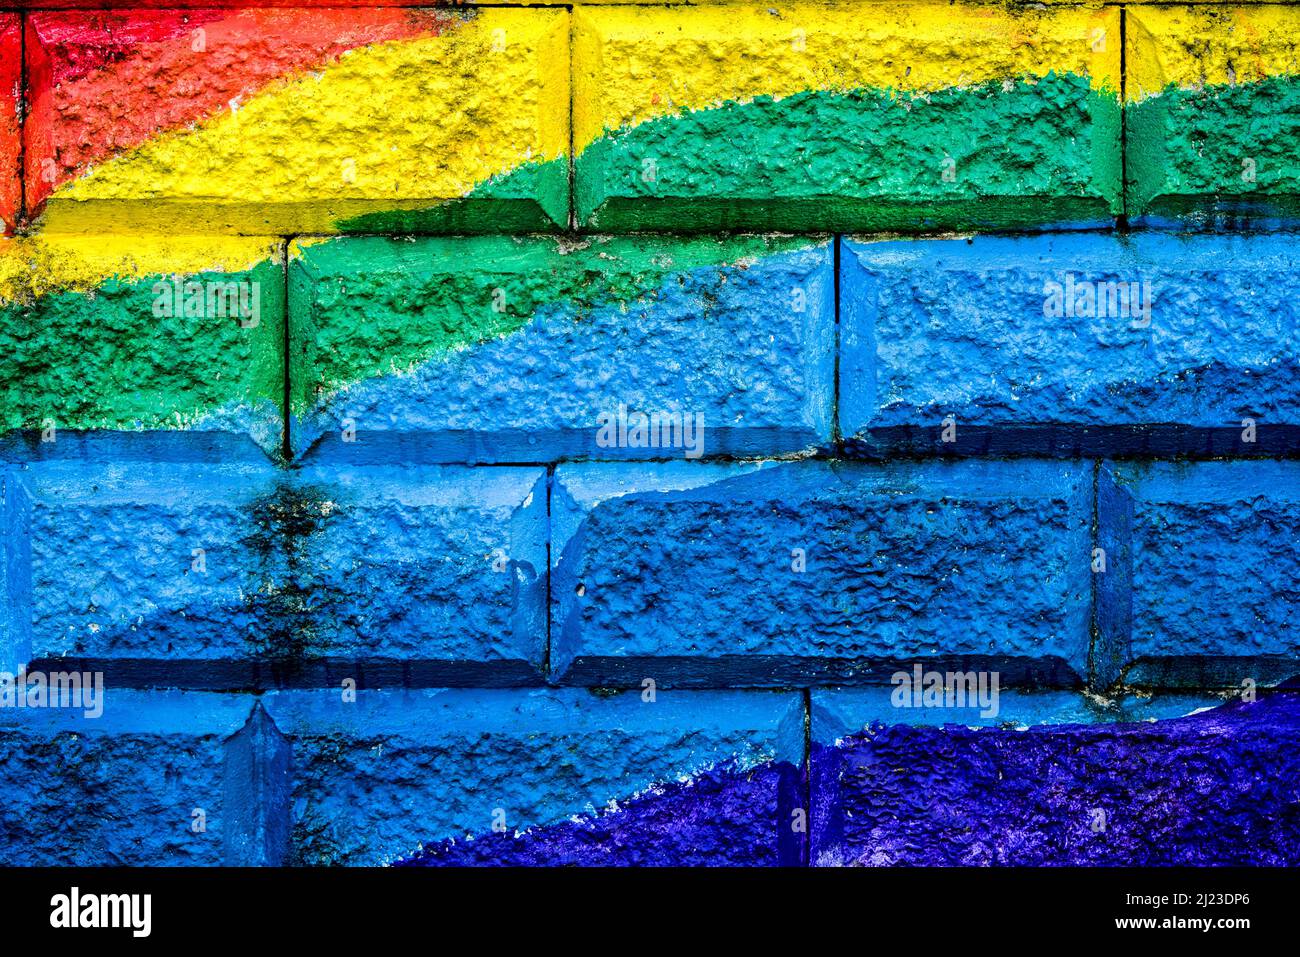 Rainbow graffiti, Germany, Europe Stock Photo